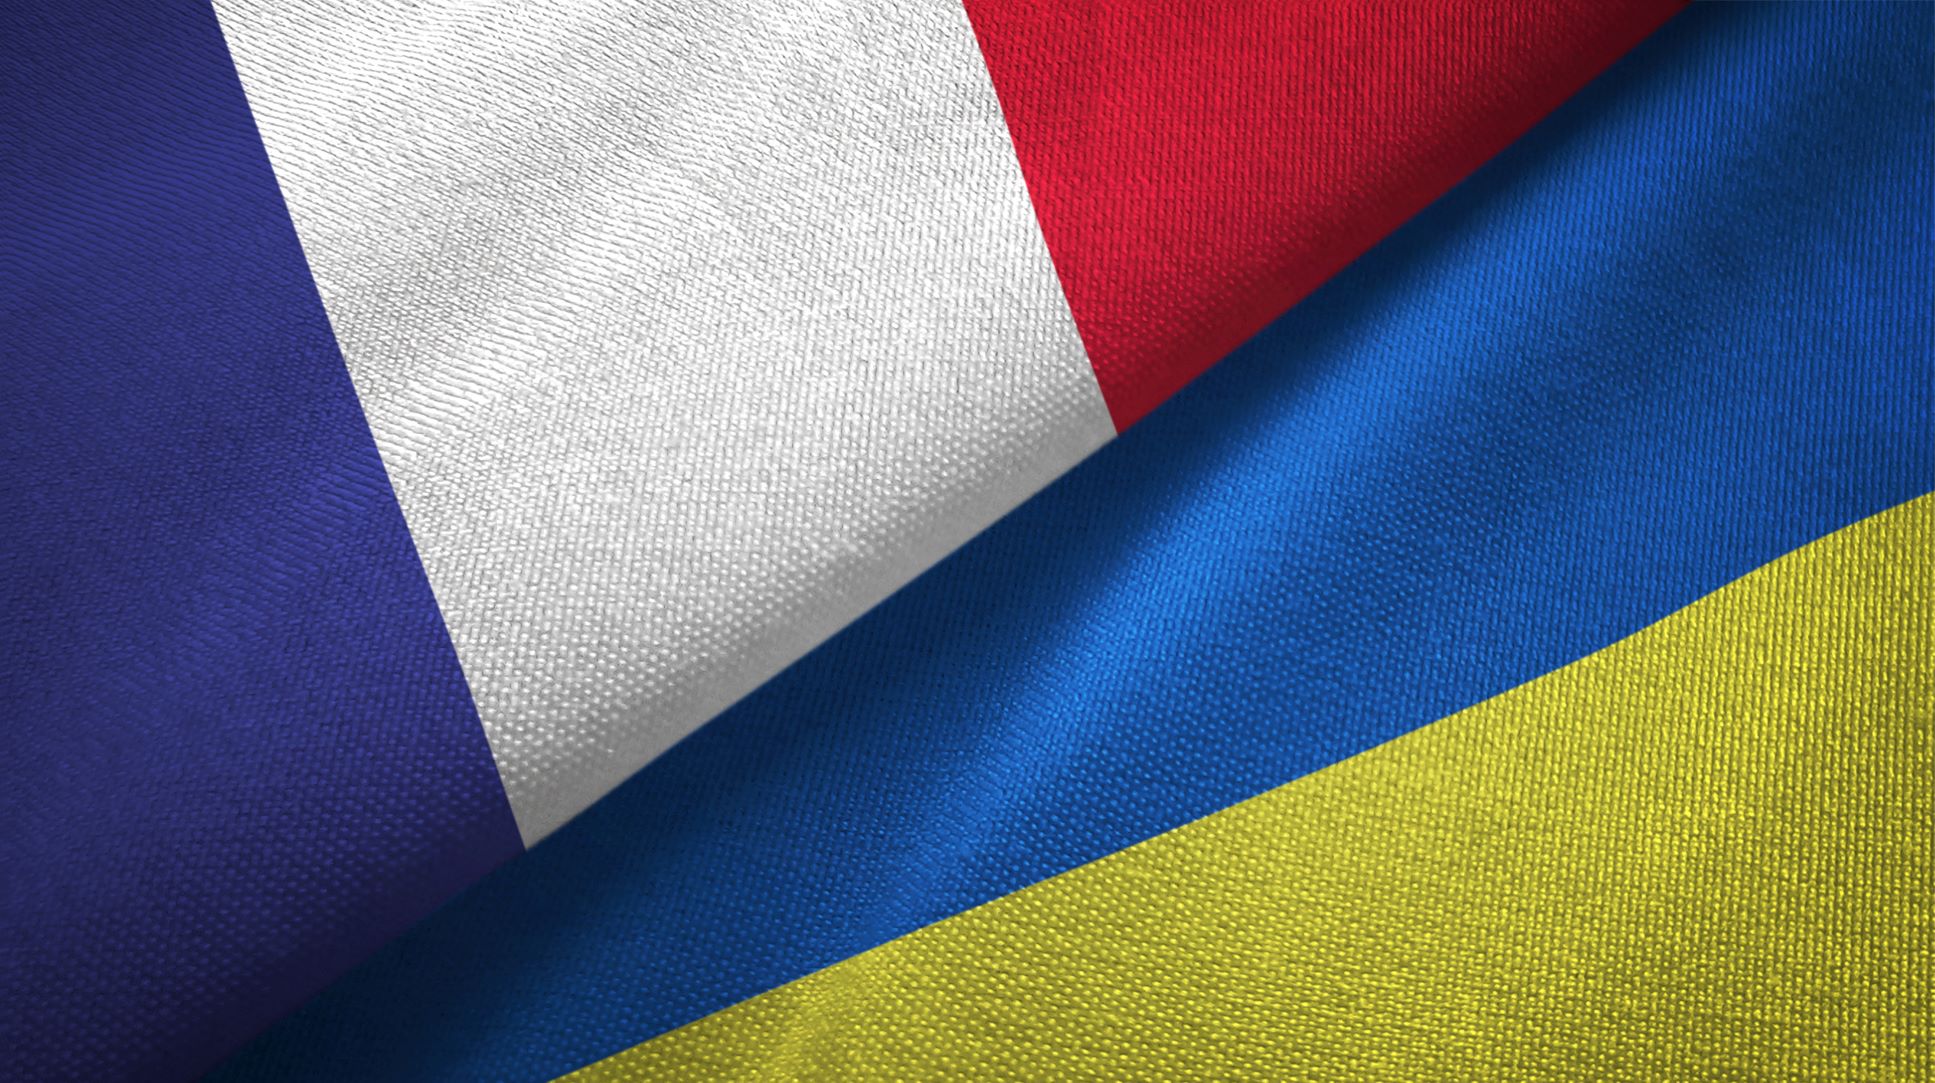 France & Ukraine Flags